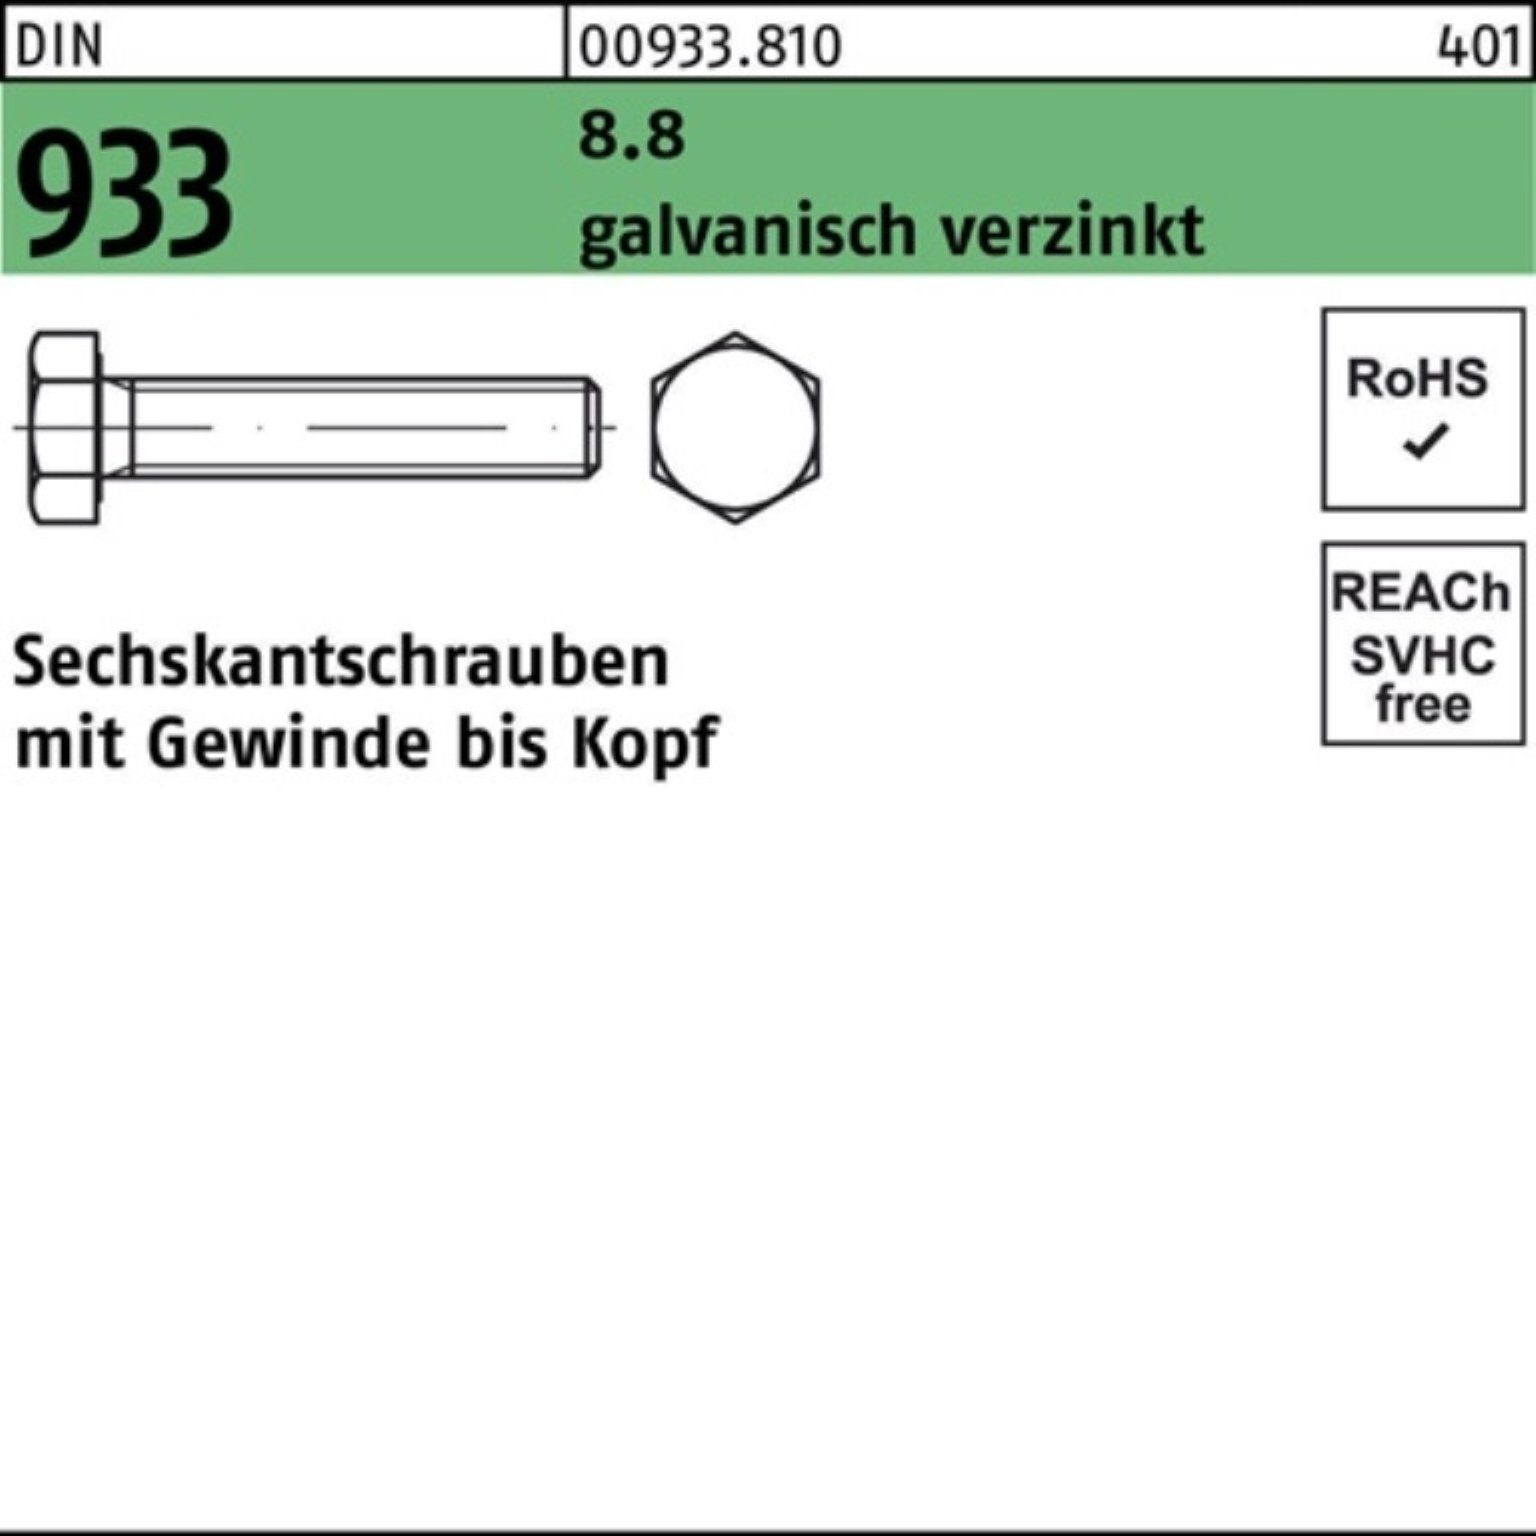 galv.verz. 45 500er Stü DIN Reyher VG Sechskantschraube 933 M4x 500 Sechskantschraube Pack 8.8